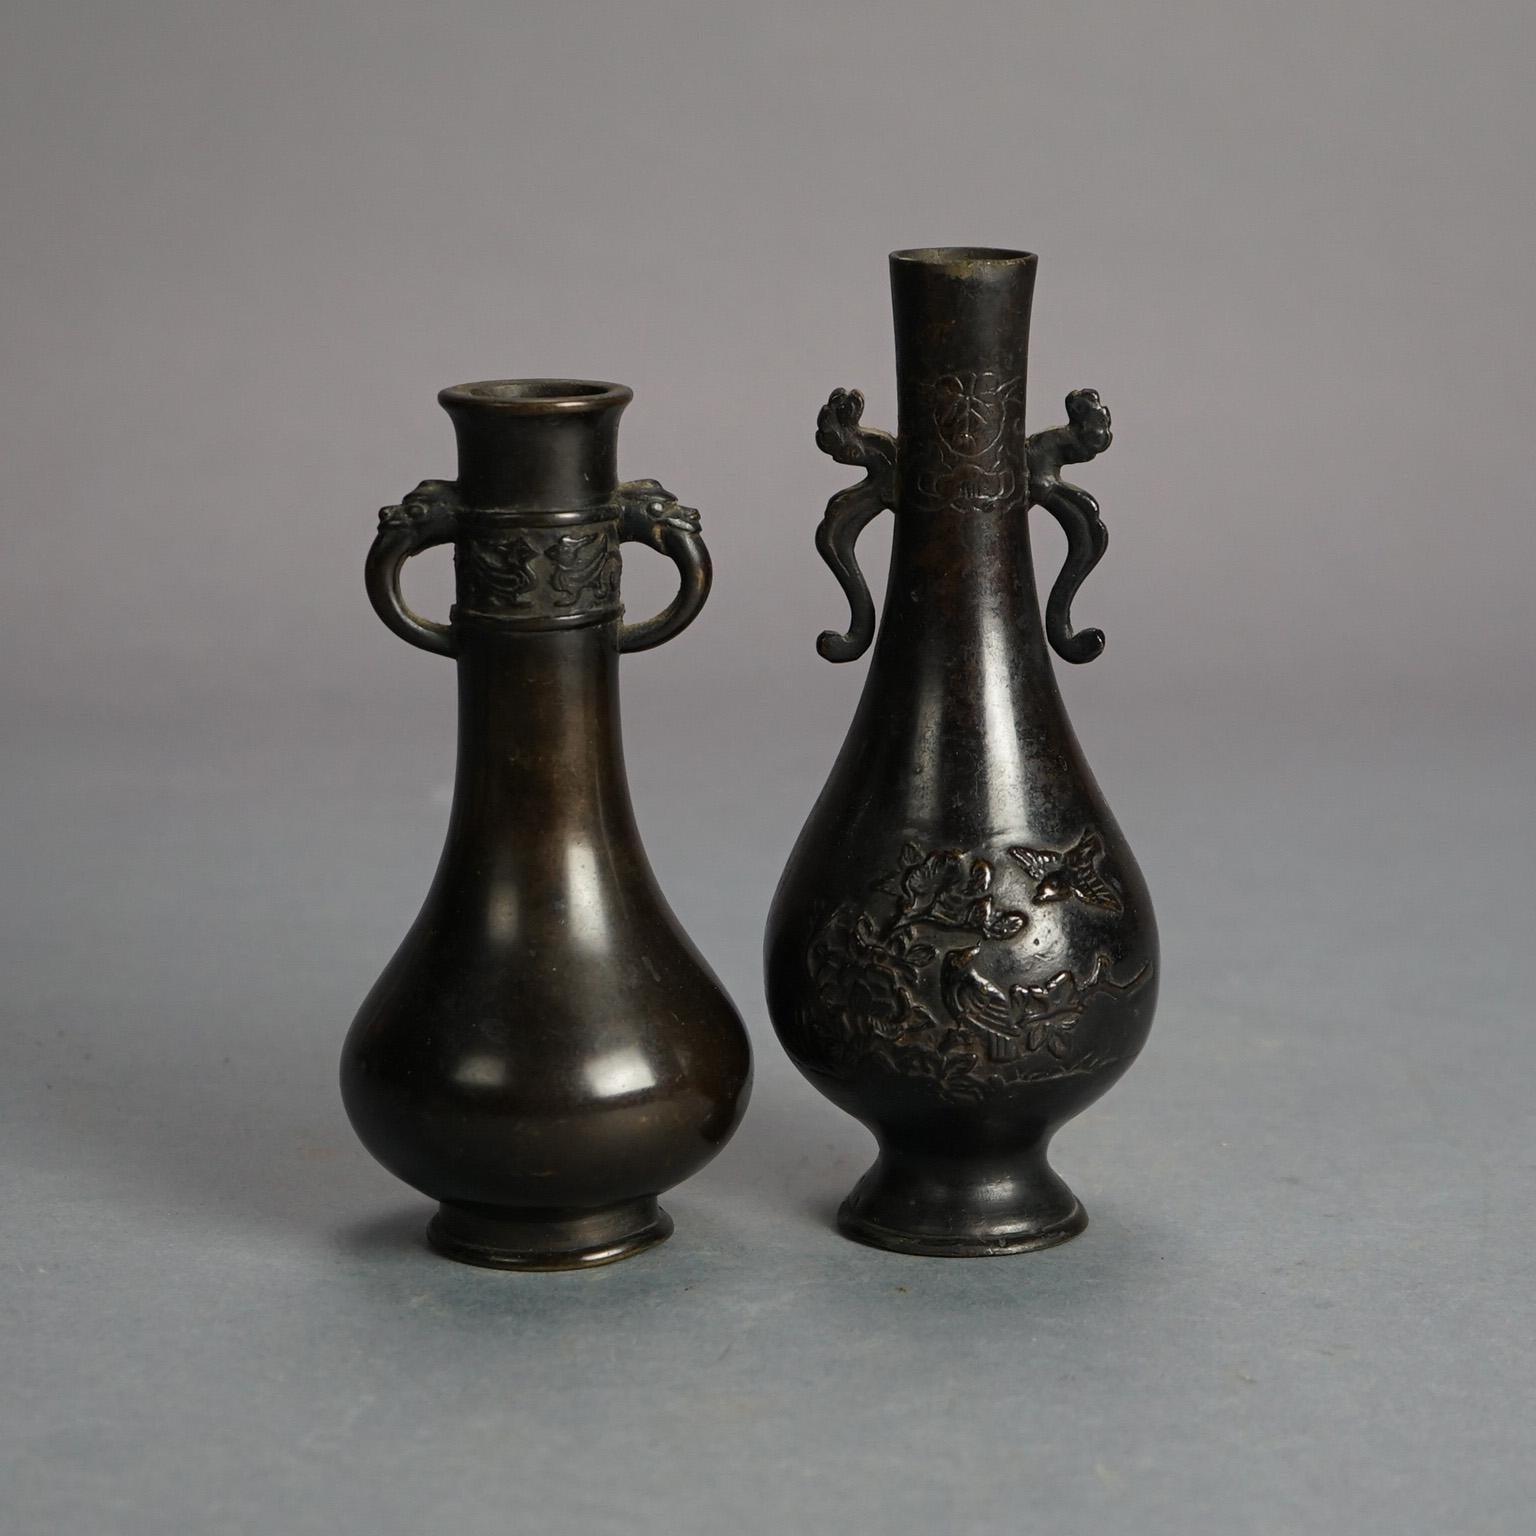 Paar antike japanische Meiji-Vasen aus Bronzeguss mit doppeltem Henkel, um 1920

Maße - 6,5 